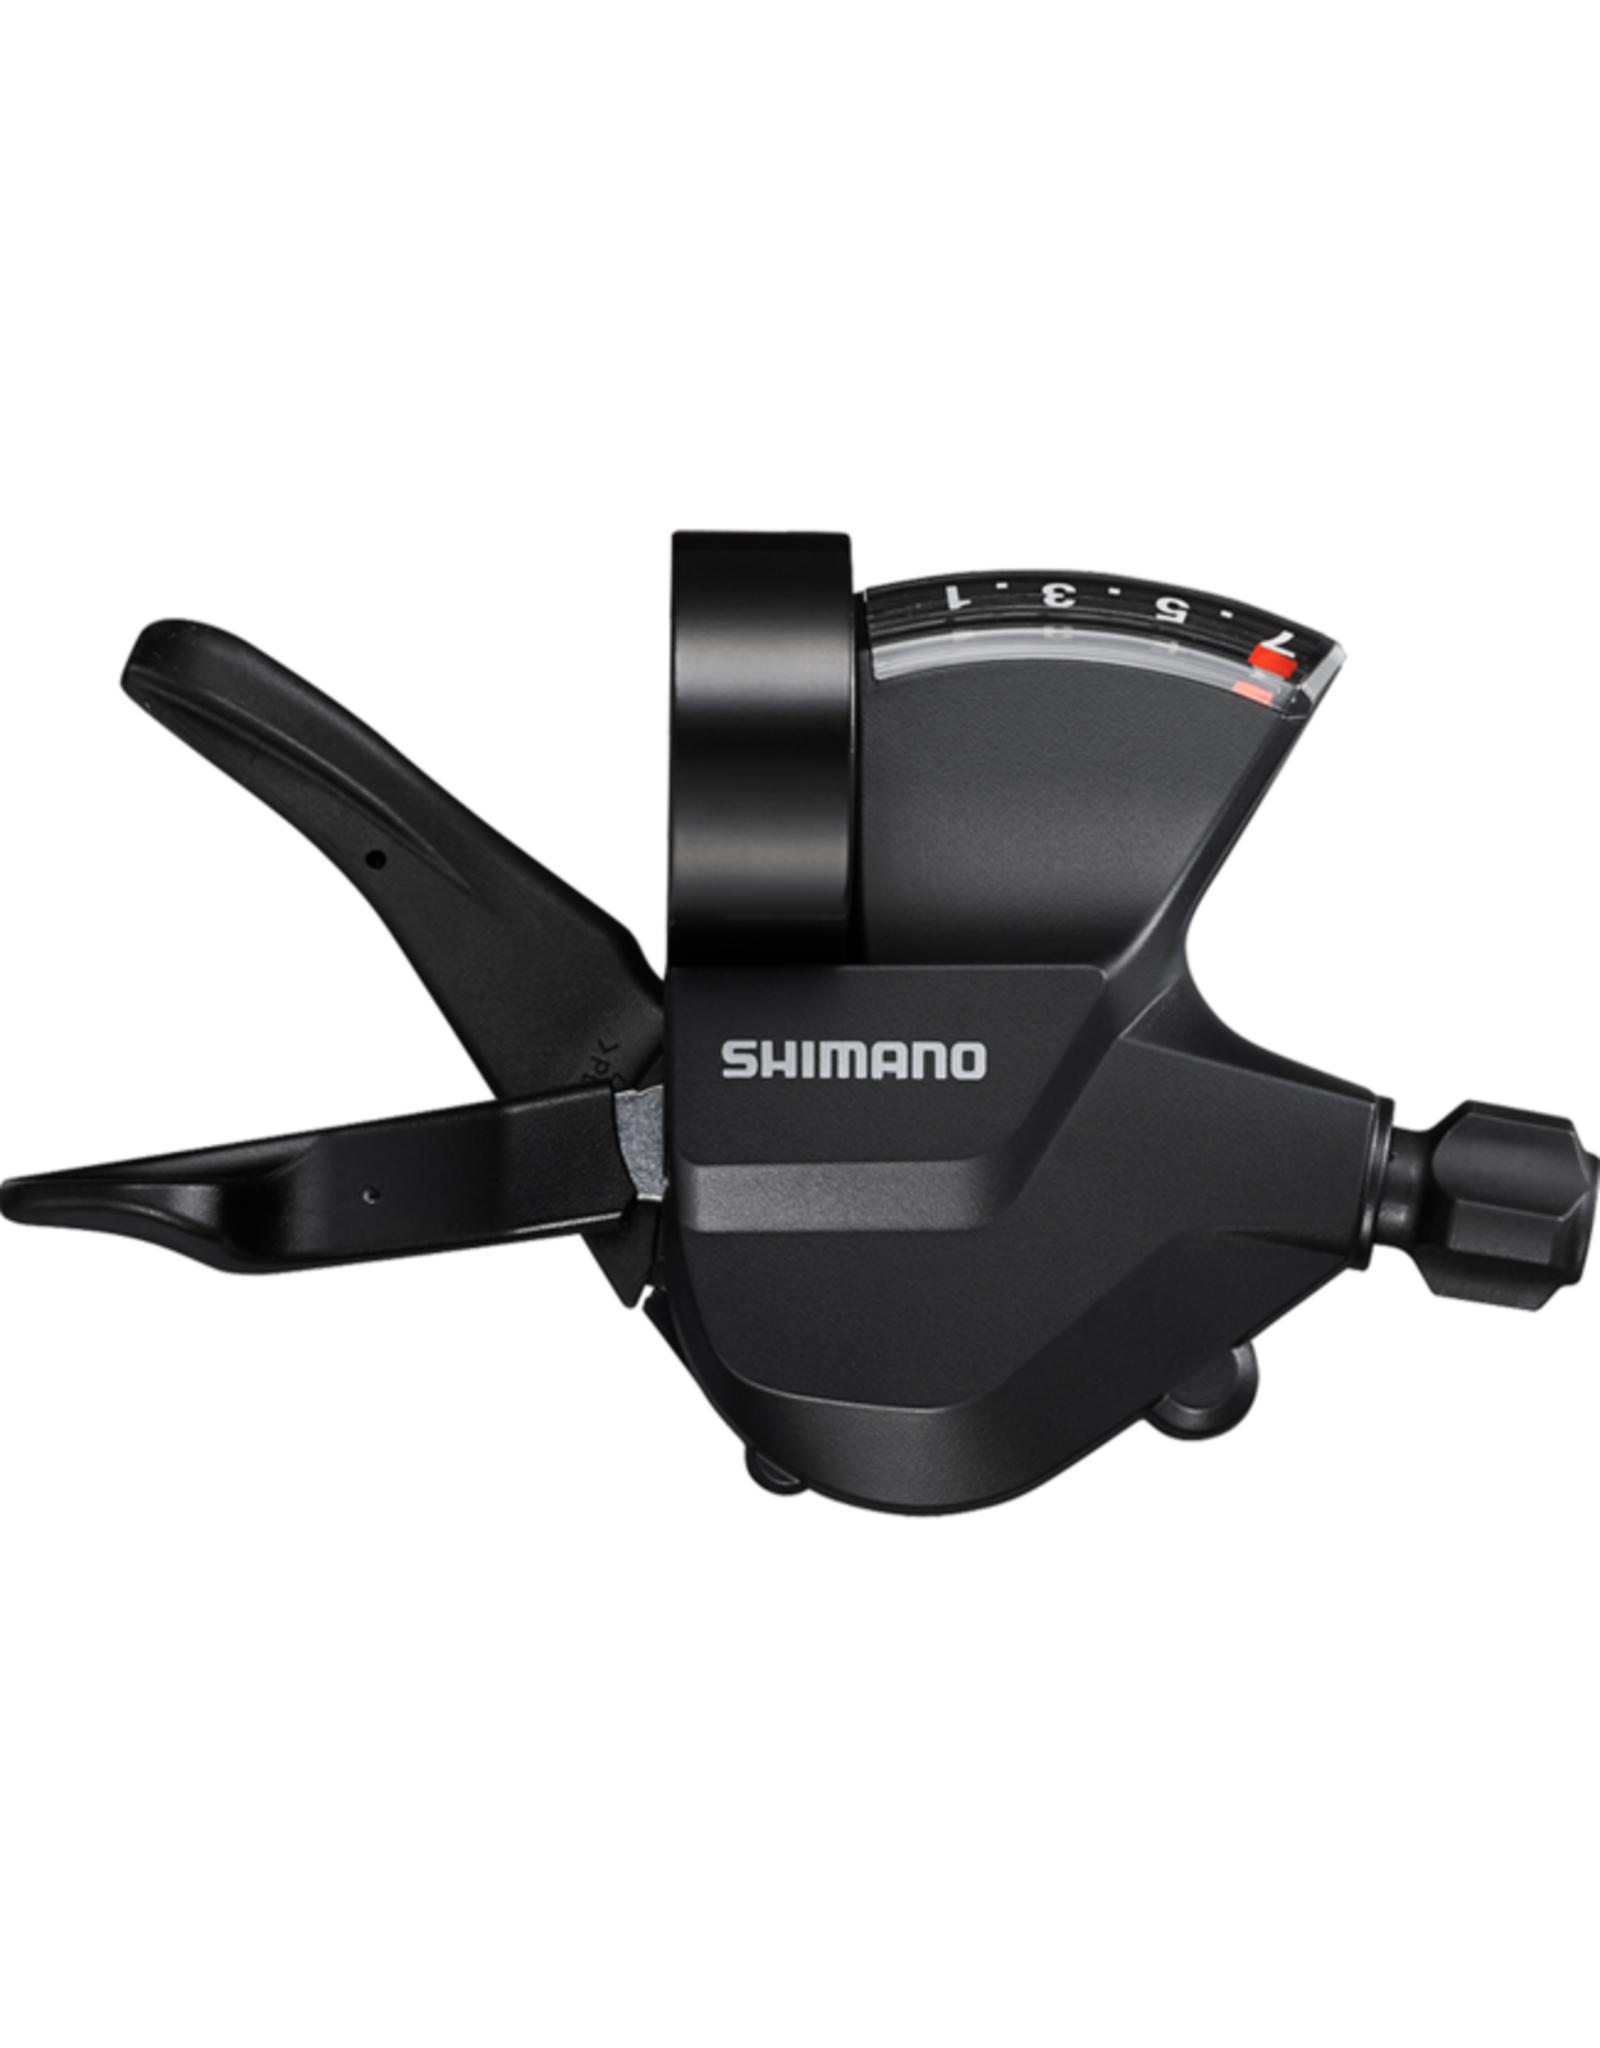 Shimano SHIFT LEVER SHIMANO SL-M315-7R 7S BLACK